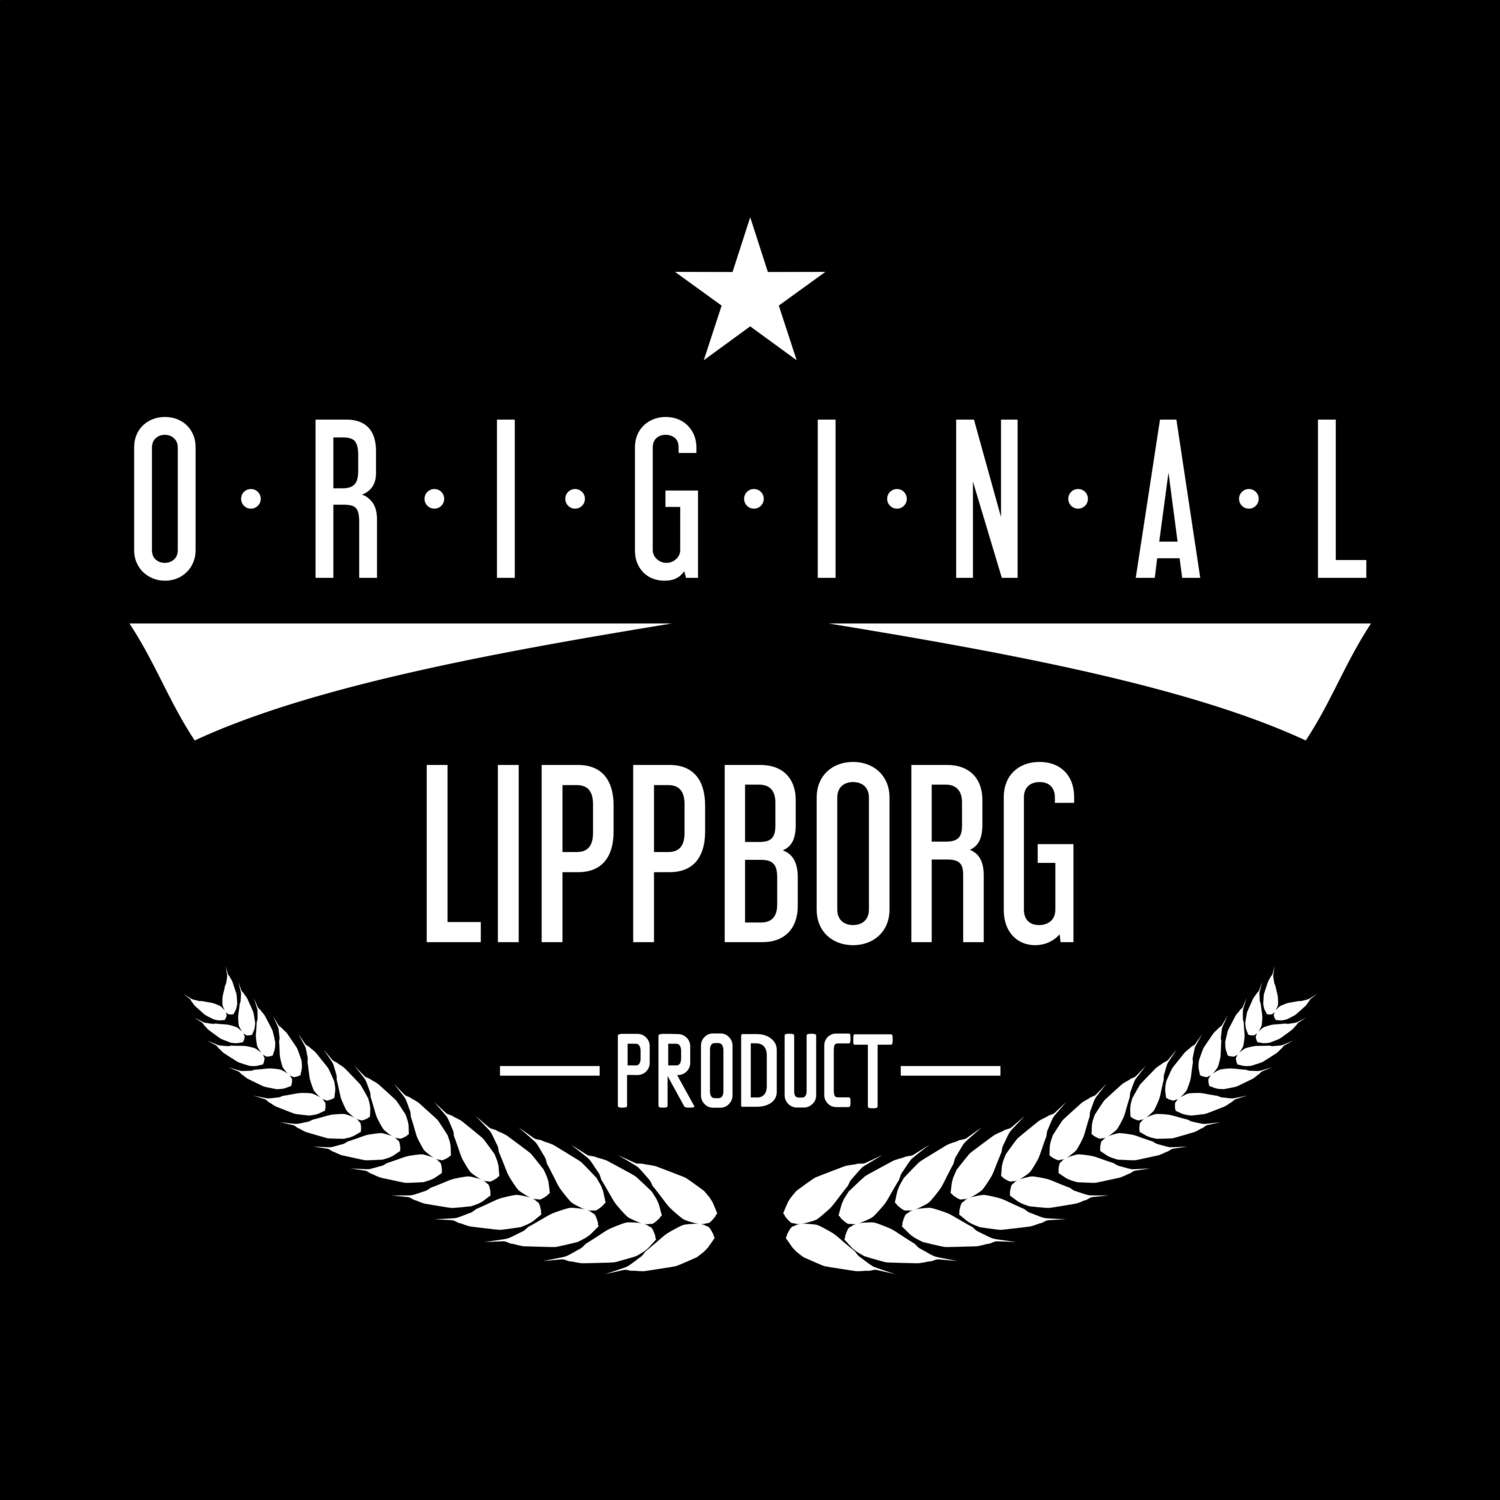 Lippborg T-Shirt »Original Product«